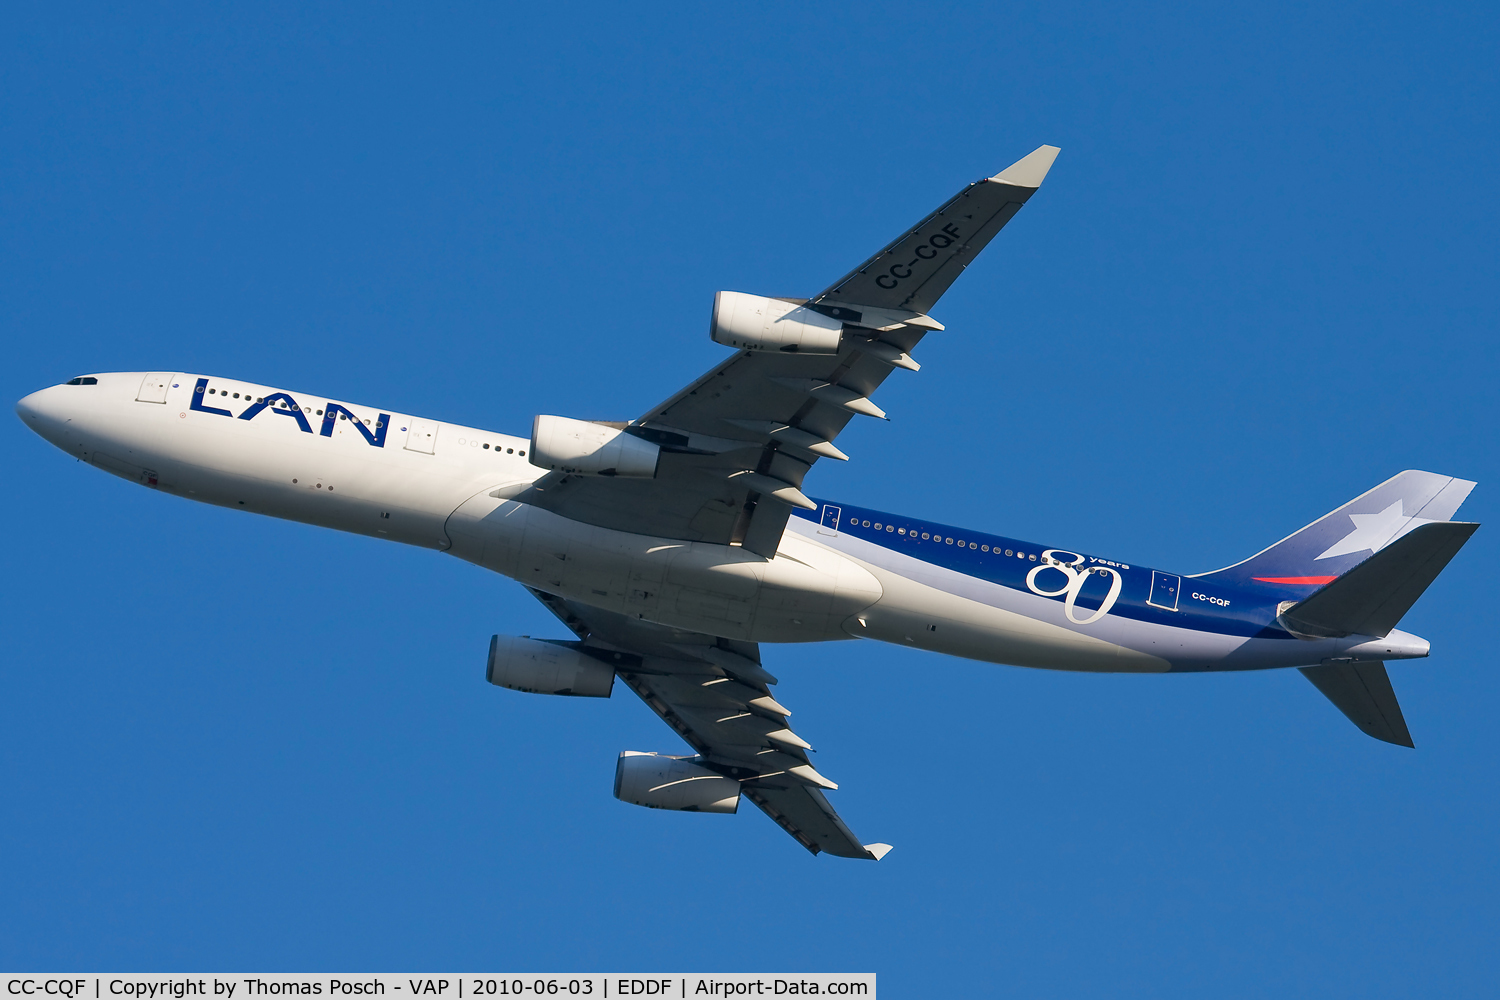 CC-CQF, 2001 Airbus A340-313X C/N 442, LAN Airlines